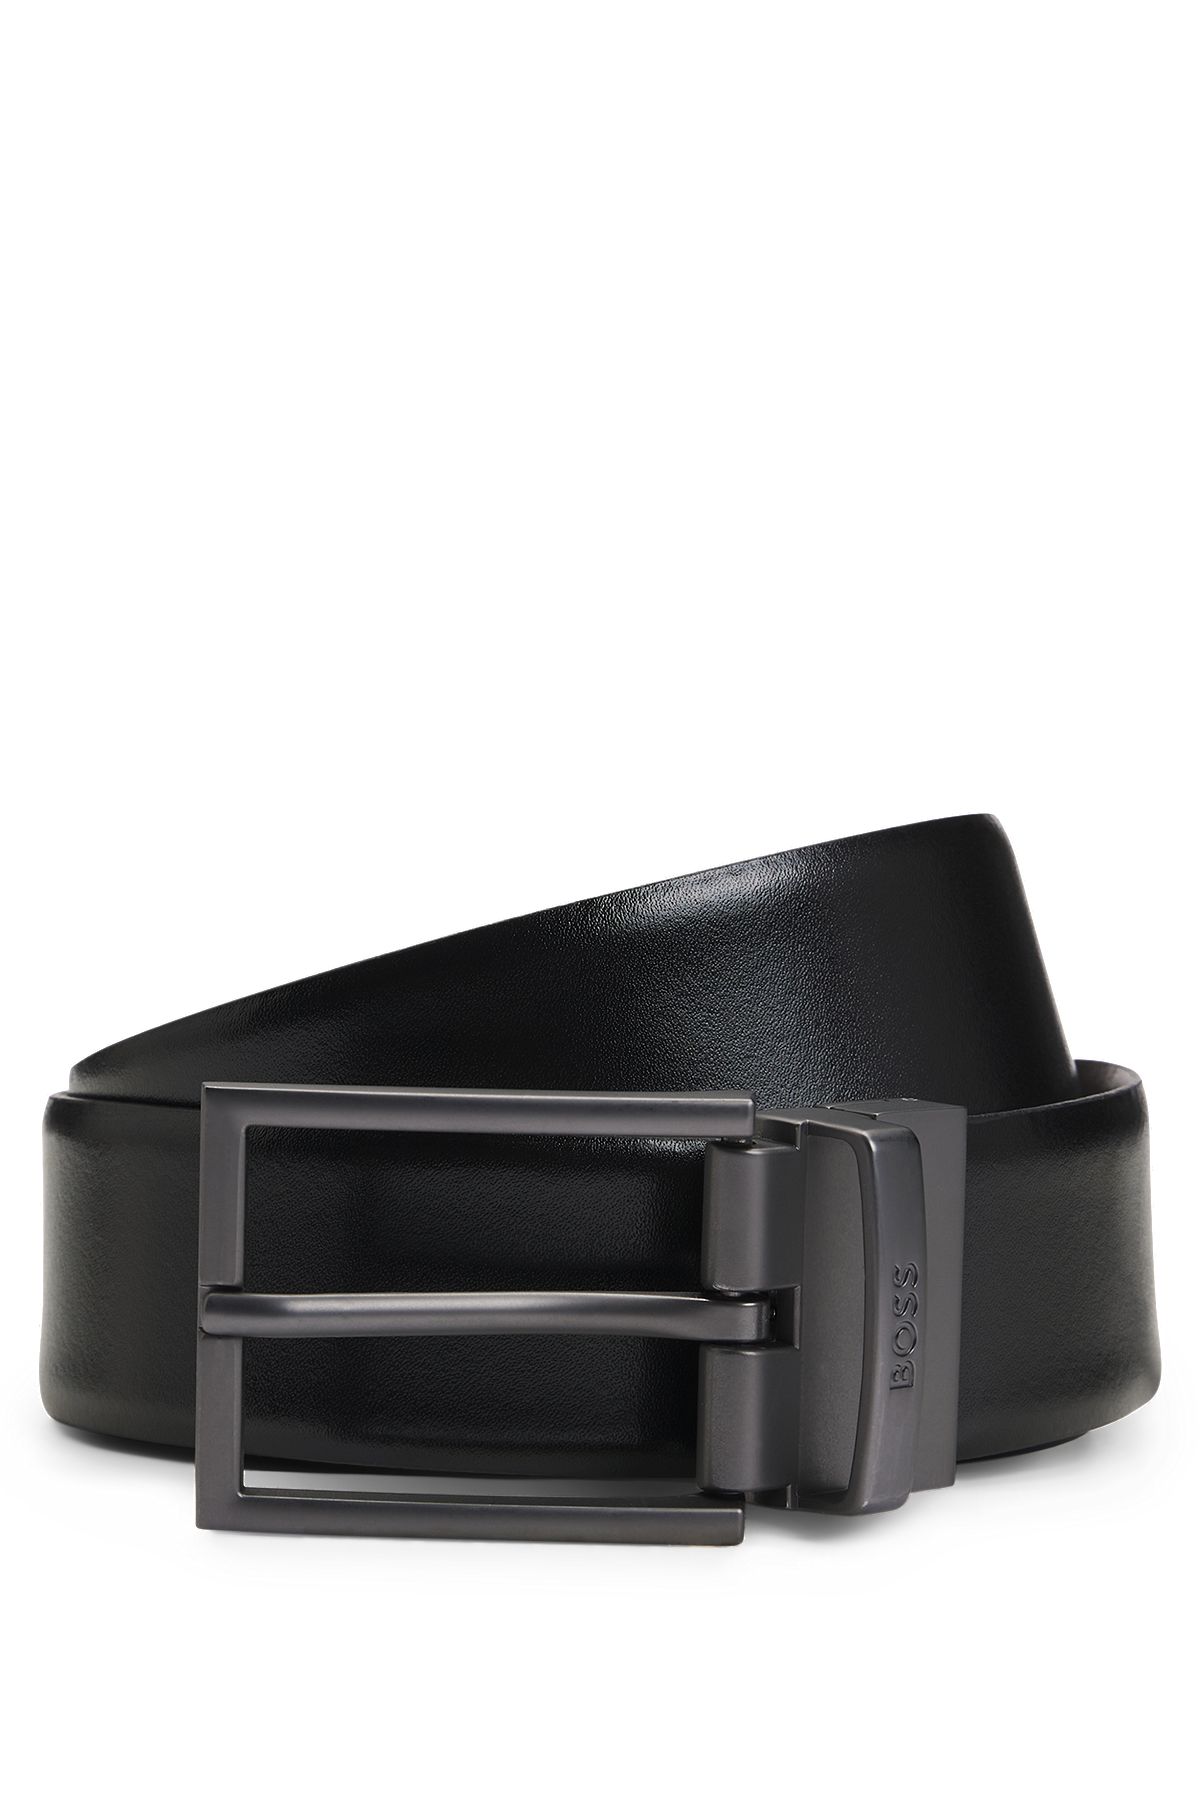 Burberry Black Leather Belt Silvertone Buckle Mens Size 44 110